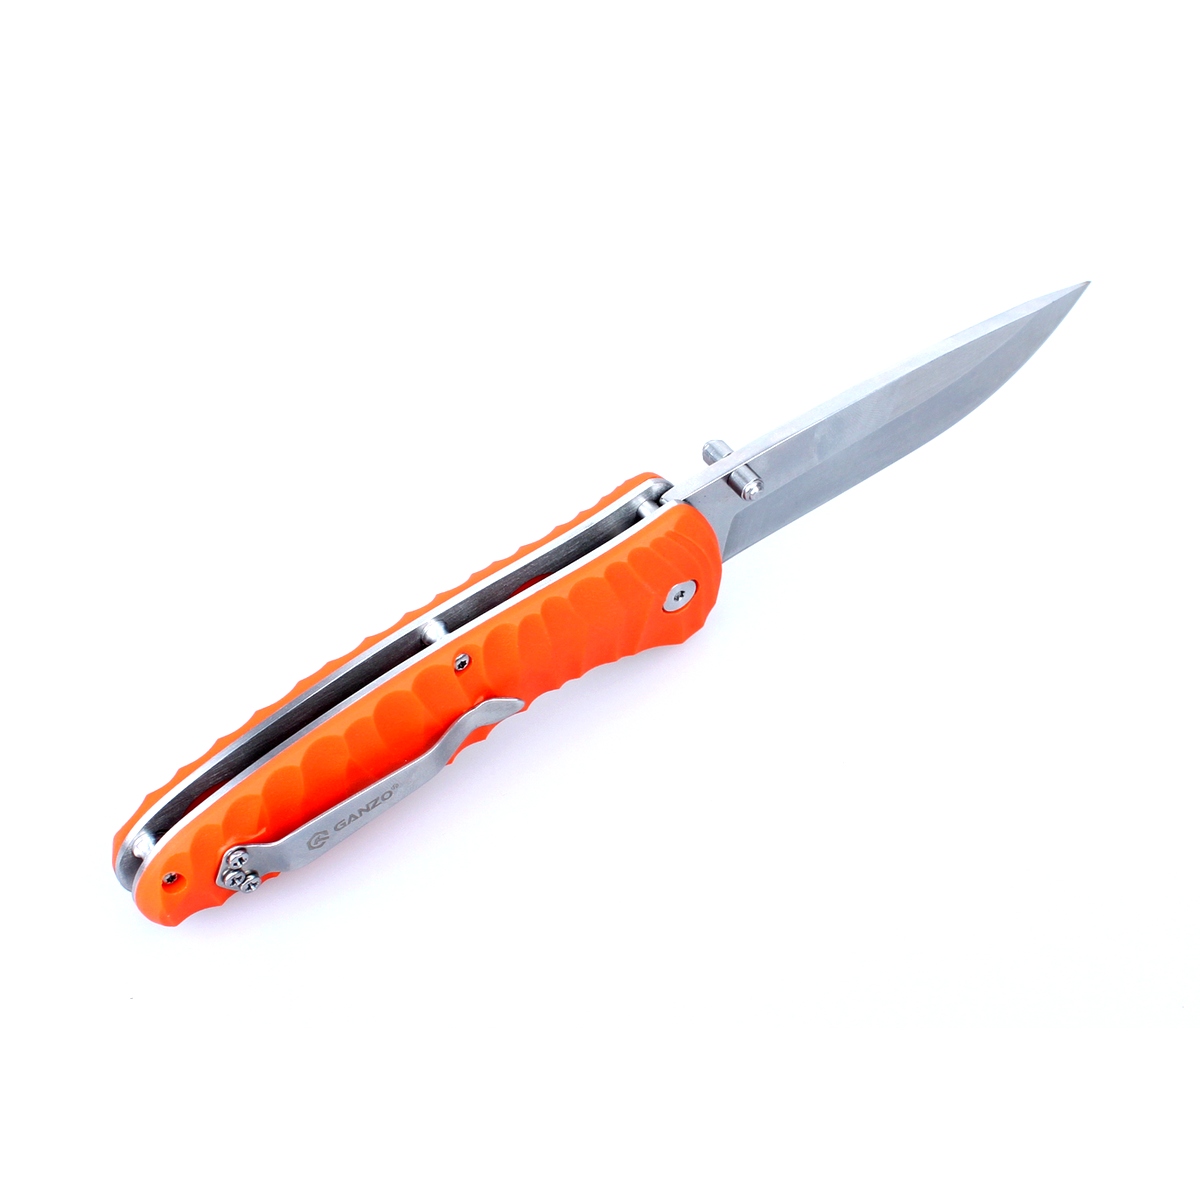 картинка Нож Ganzo G6252-OR оранжевый